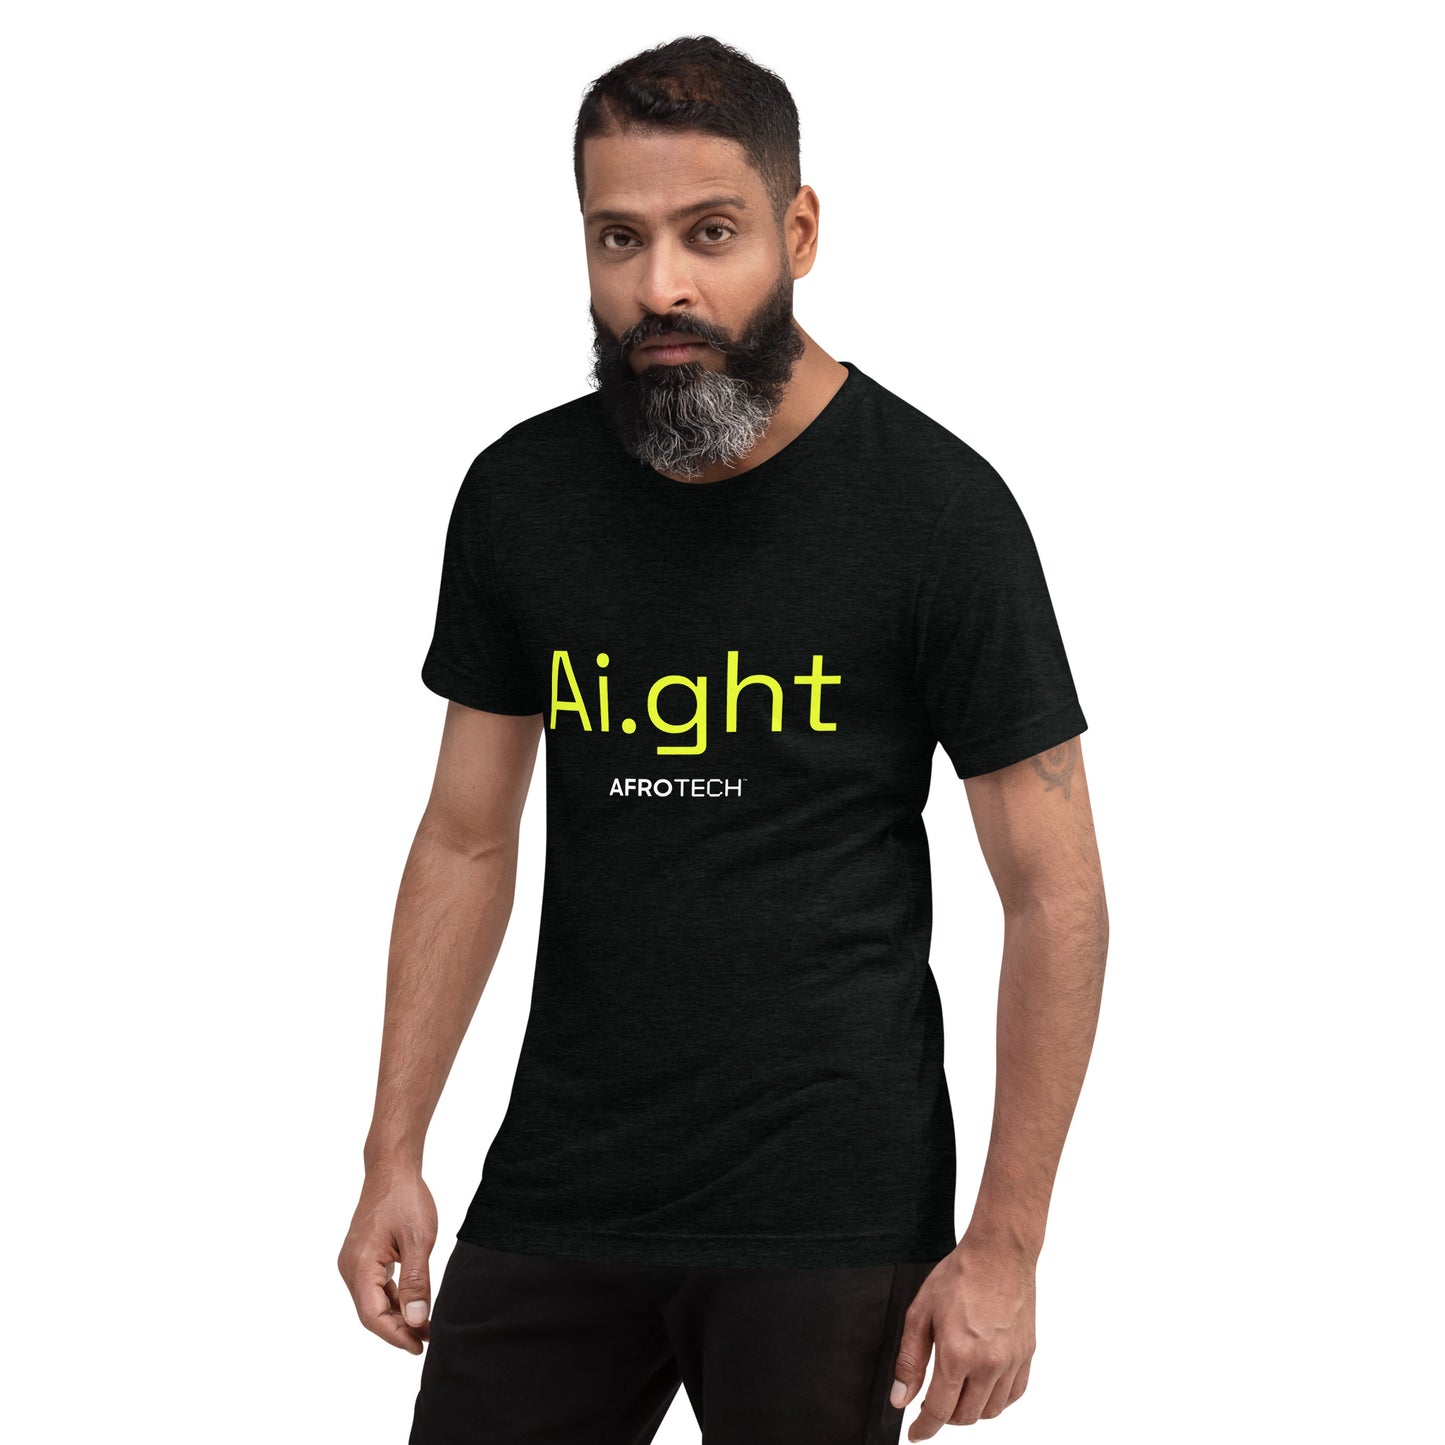 "Ai.ght" Short Sleeve T-shirt